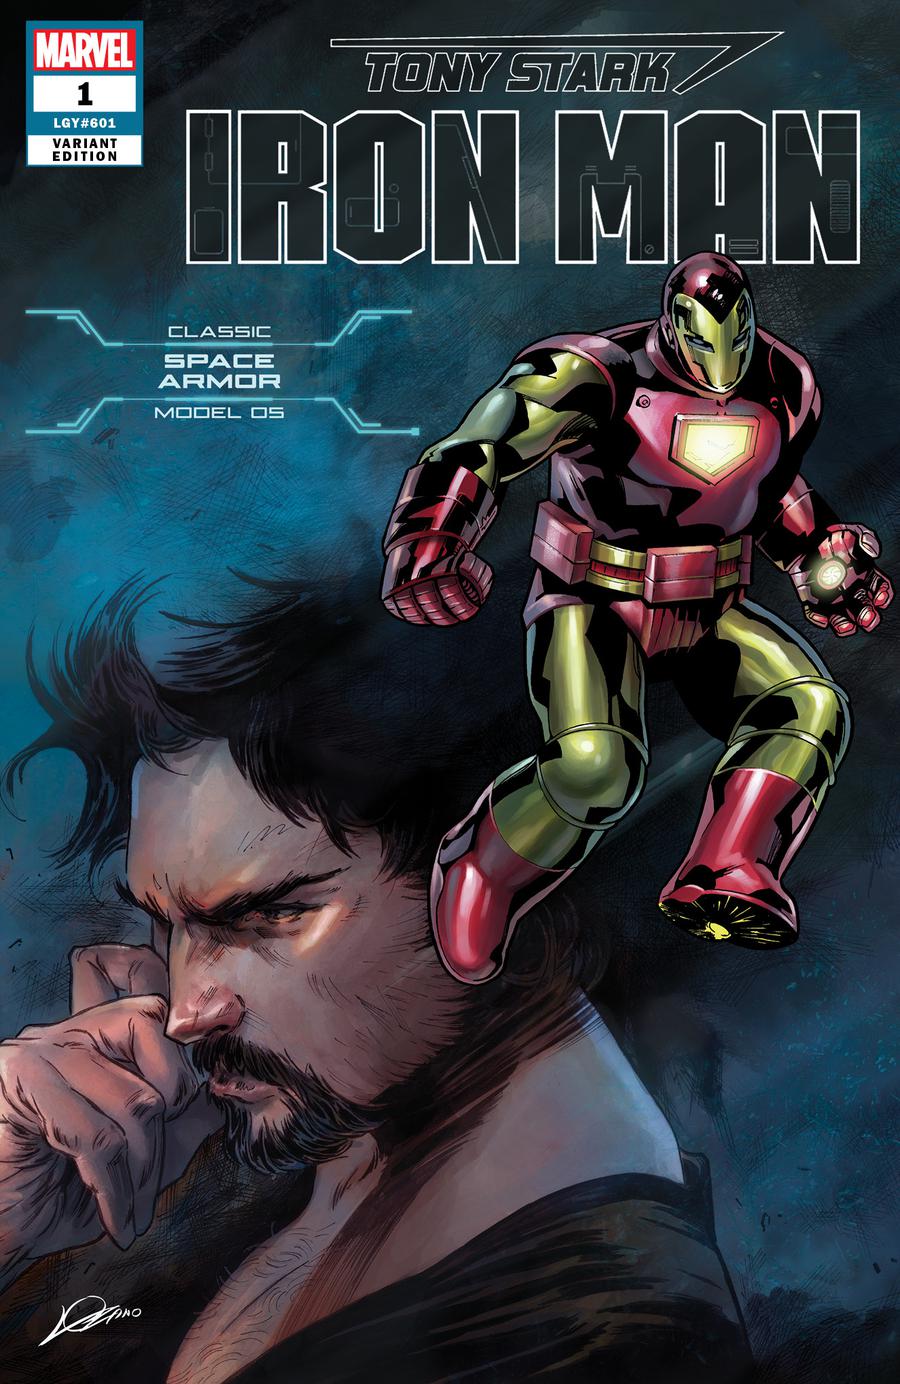 Tony Stark Iron Man #1 Cover Q Variant Alexander Lozano & Valerio Schiti Model 05 Classic Space Armor Cover